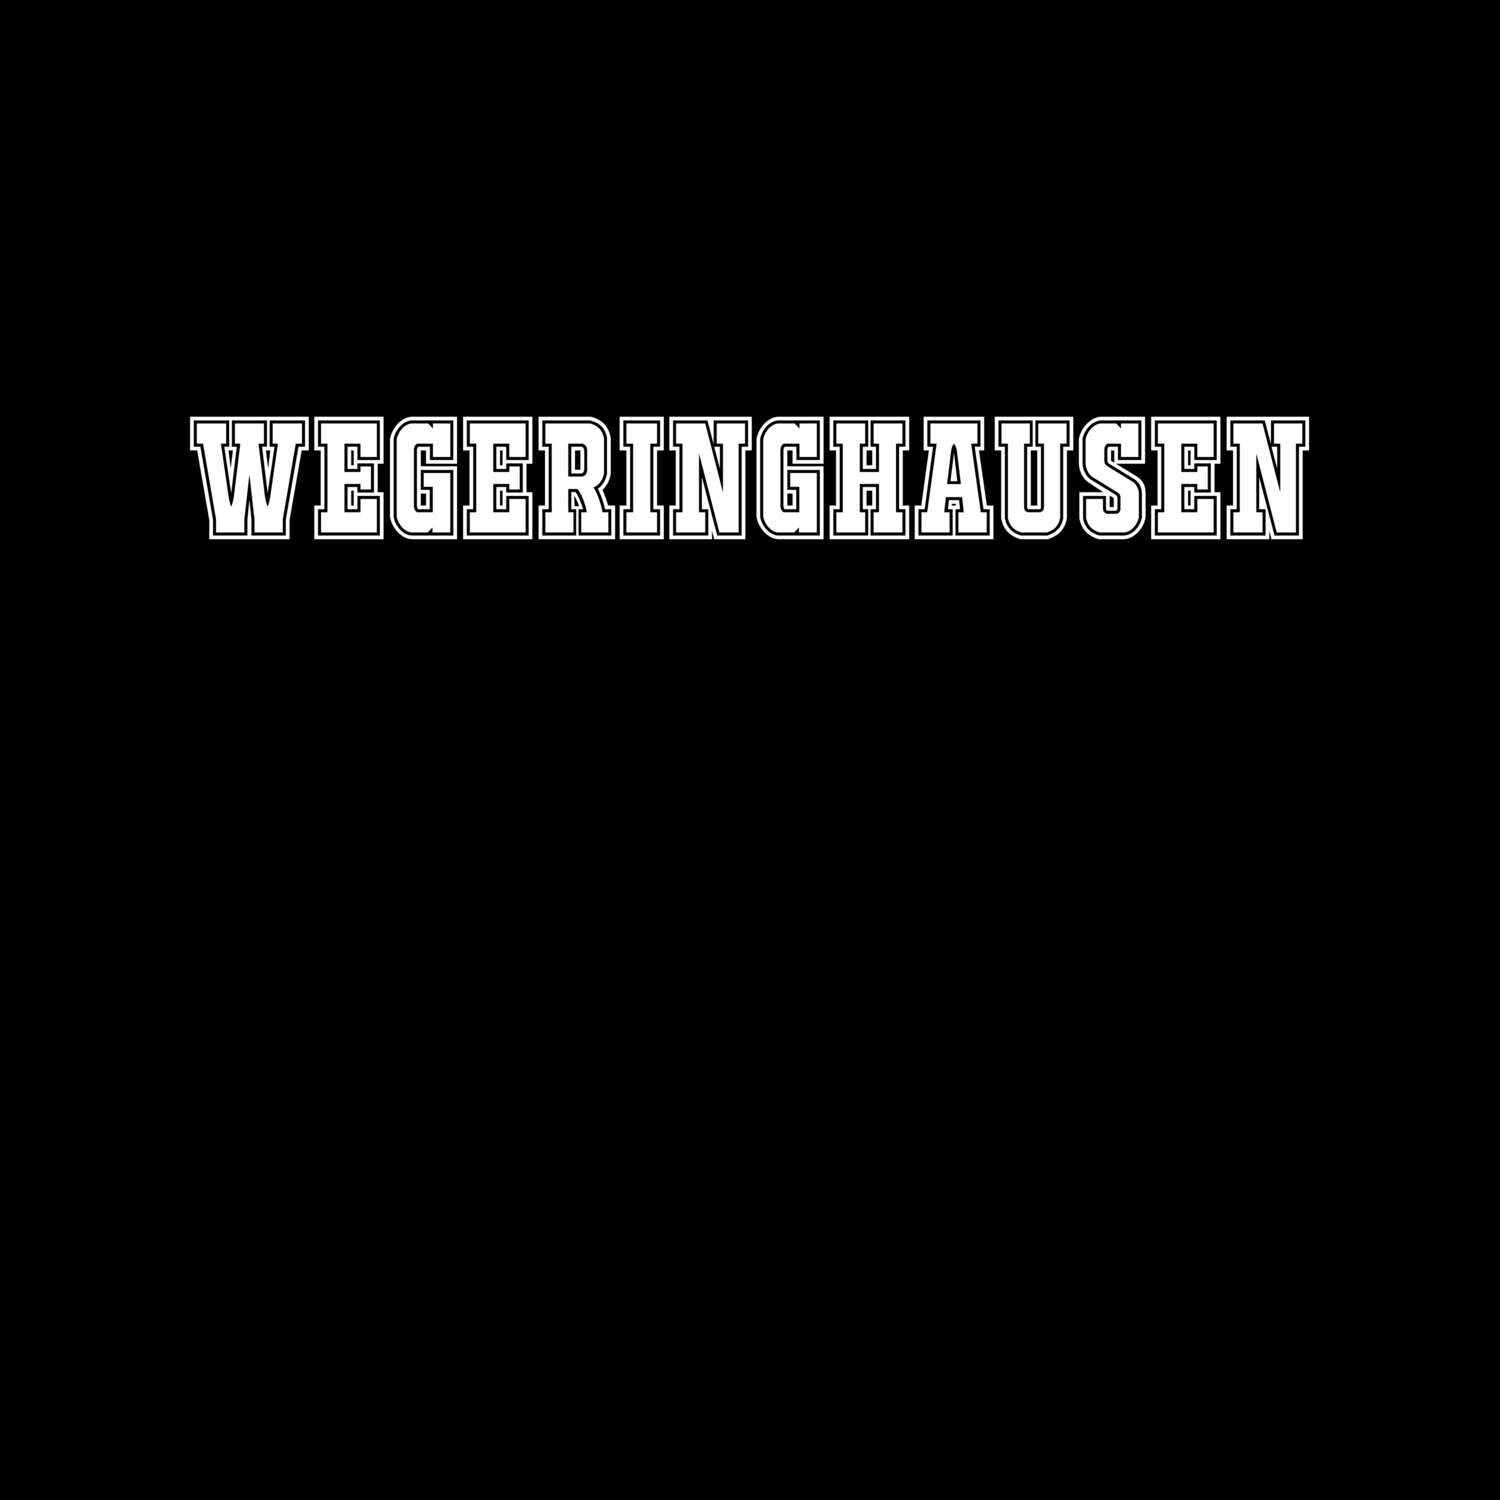 Wegeringhausen T-Shirt »Classic«